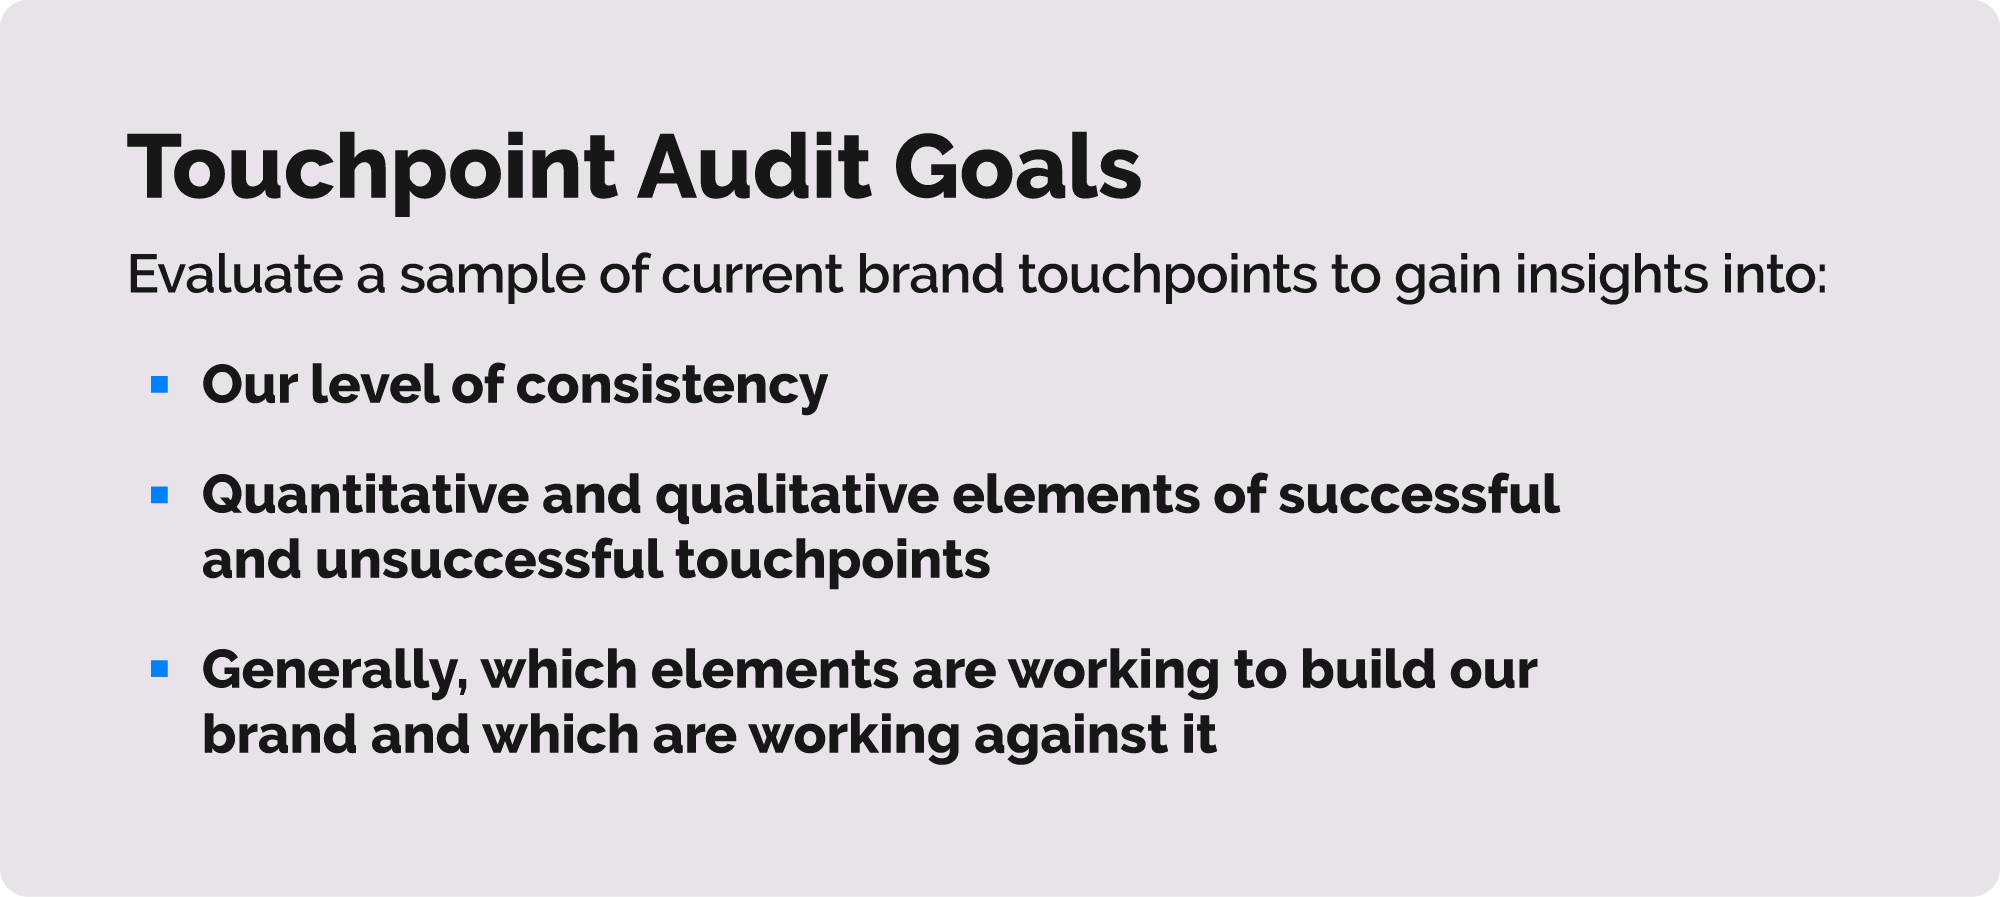 Touchpoint Audit Goals